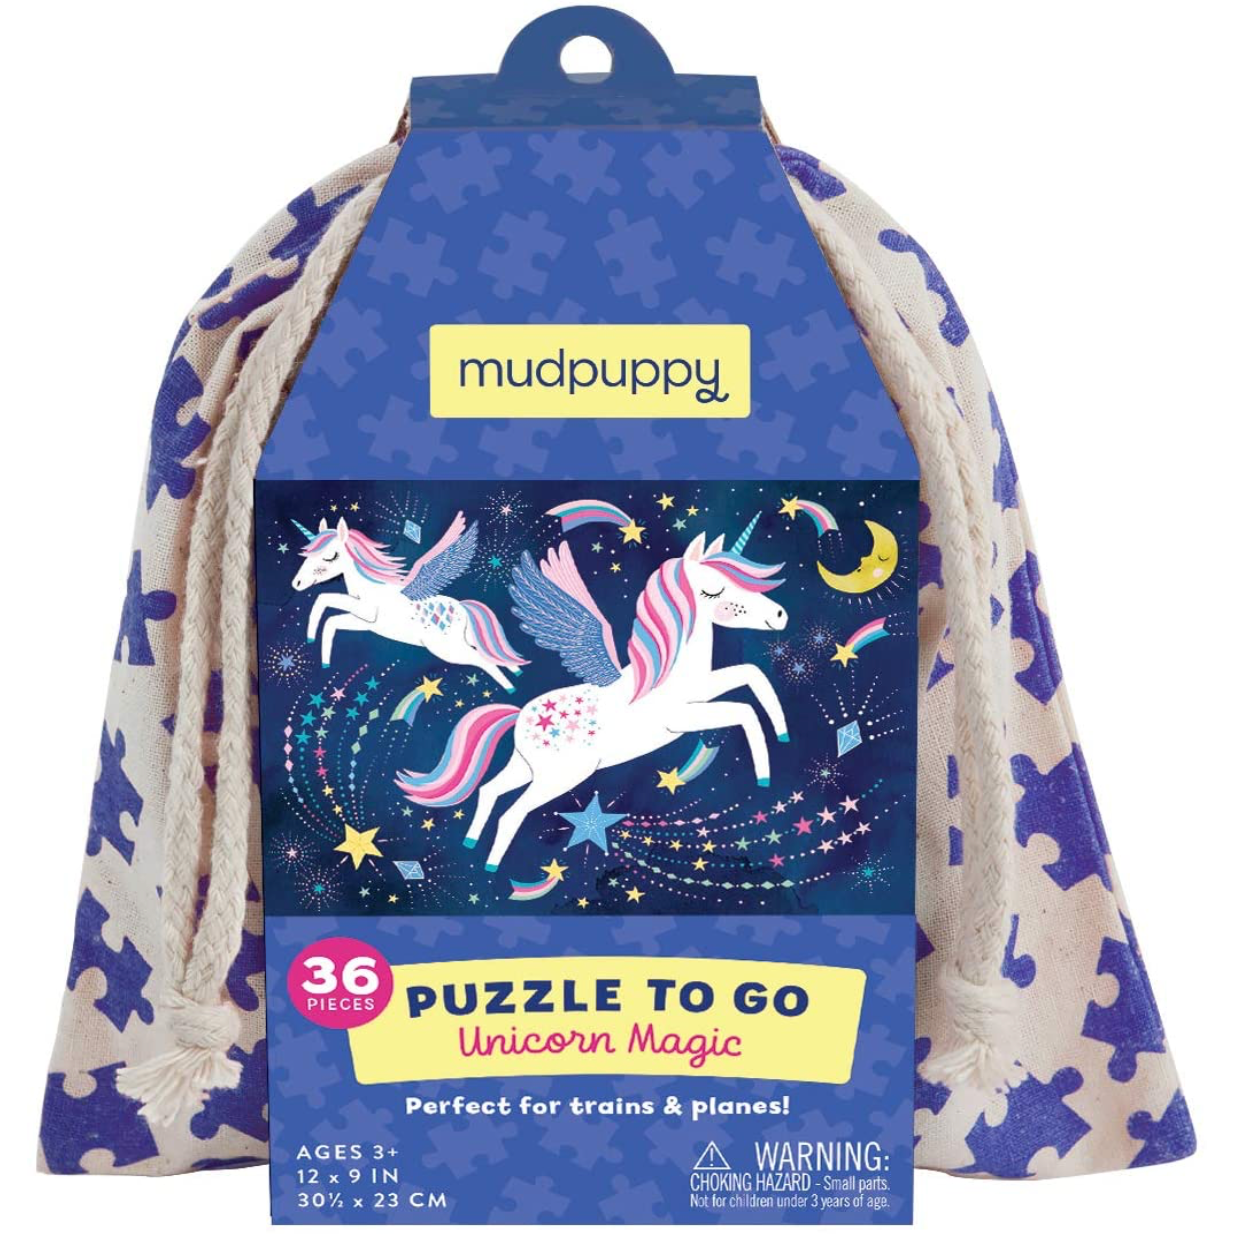 Mudpuppy Unicorn Magic to Go Puzzle (36 Pieces)